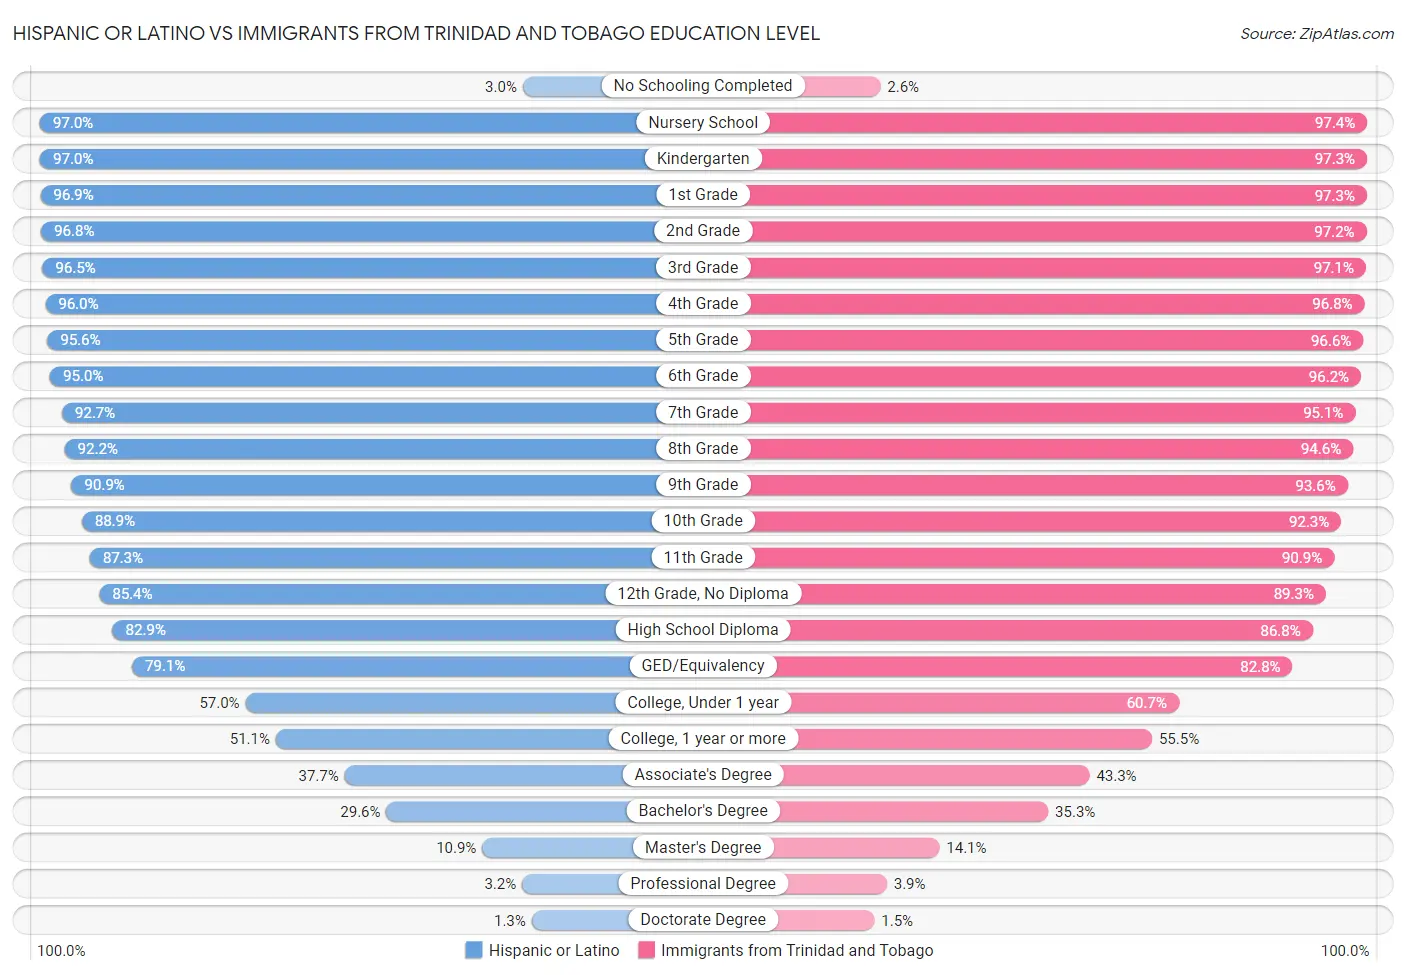 Hispanic or Latino vs Immigrants from Trinidad and Tobago Education Level